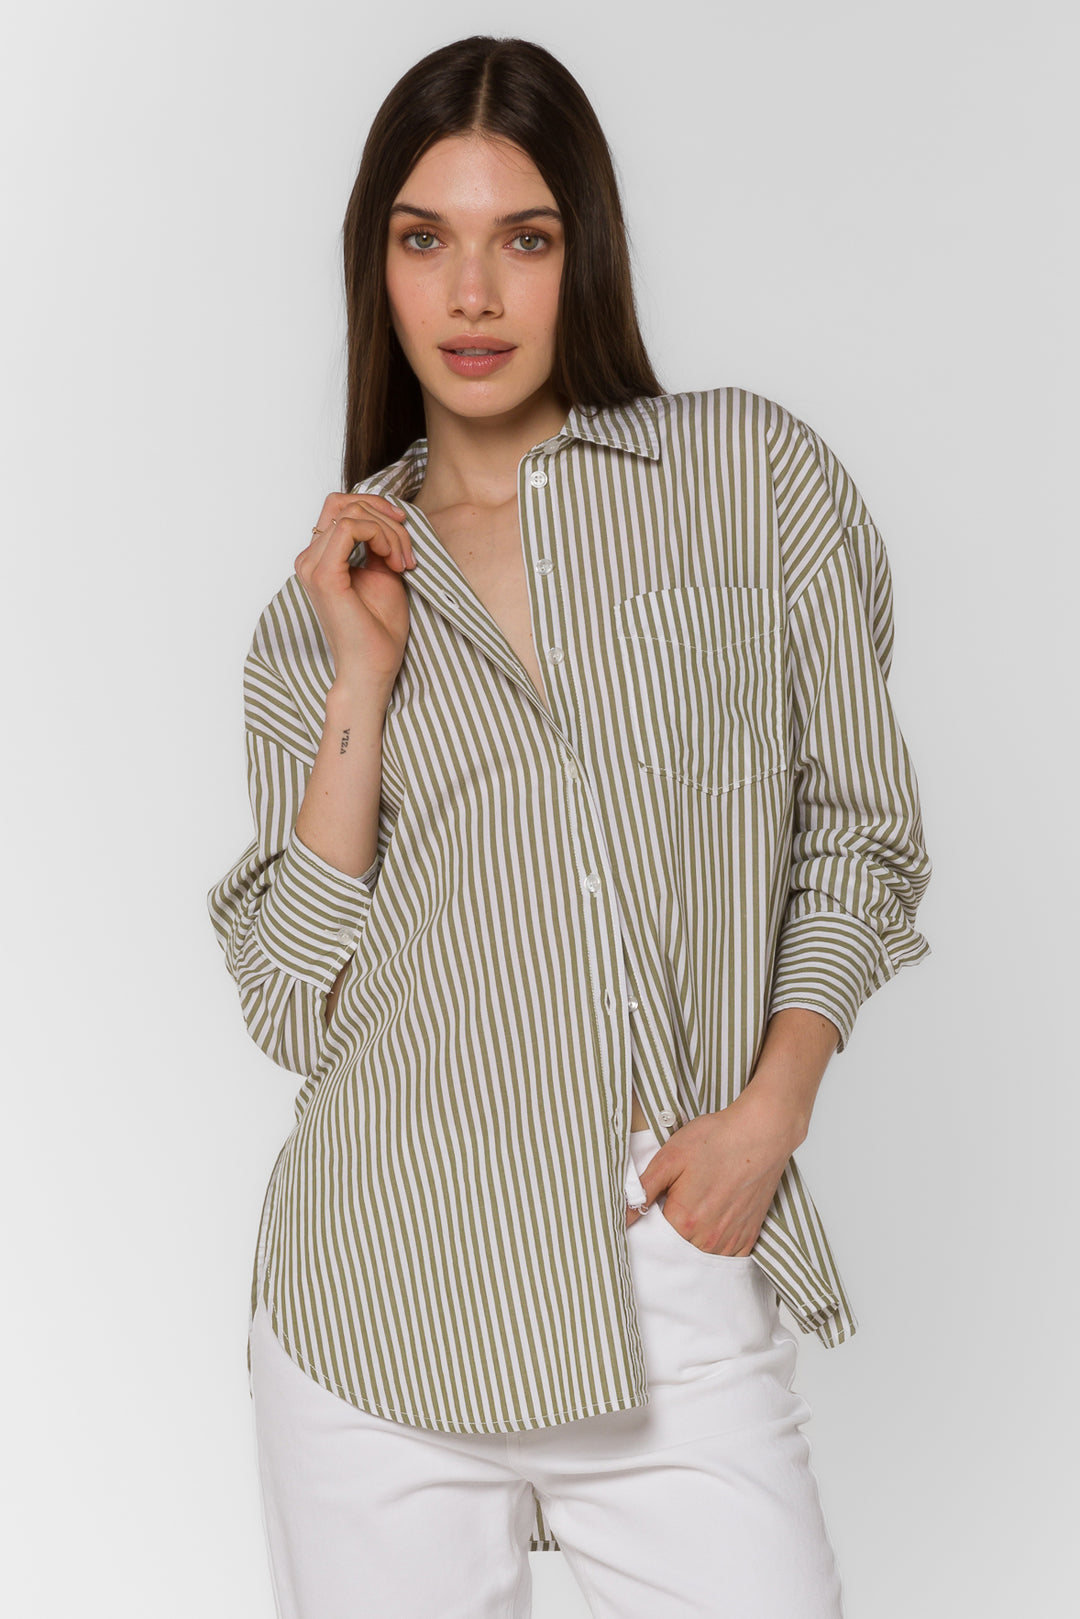 Waylor Kiwi Stripe Shirt - Tops - Velvet Heart Clothing